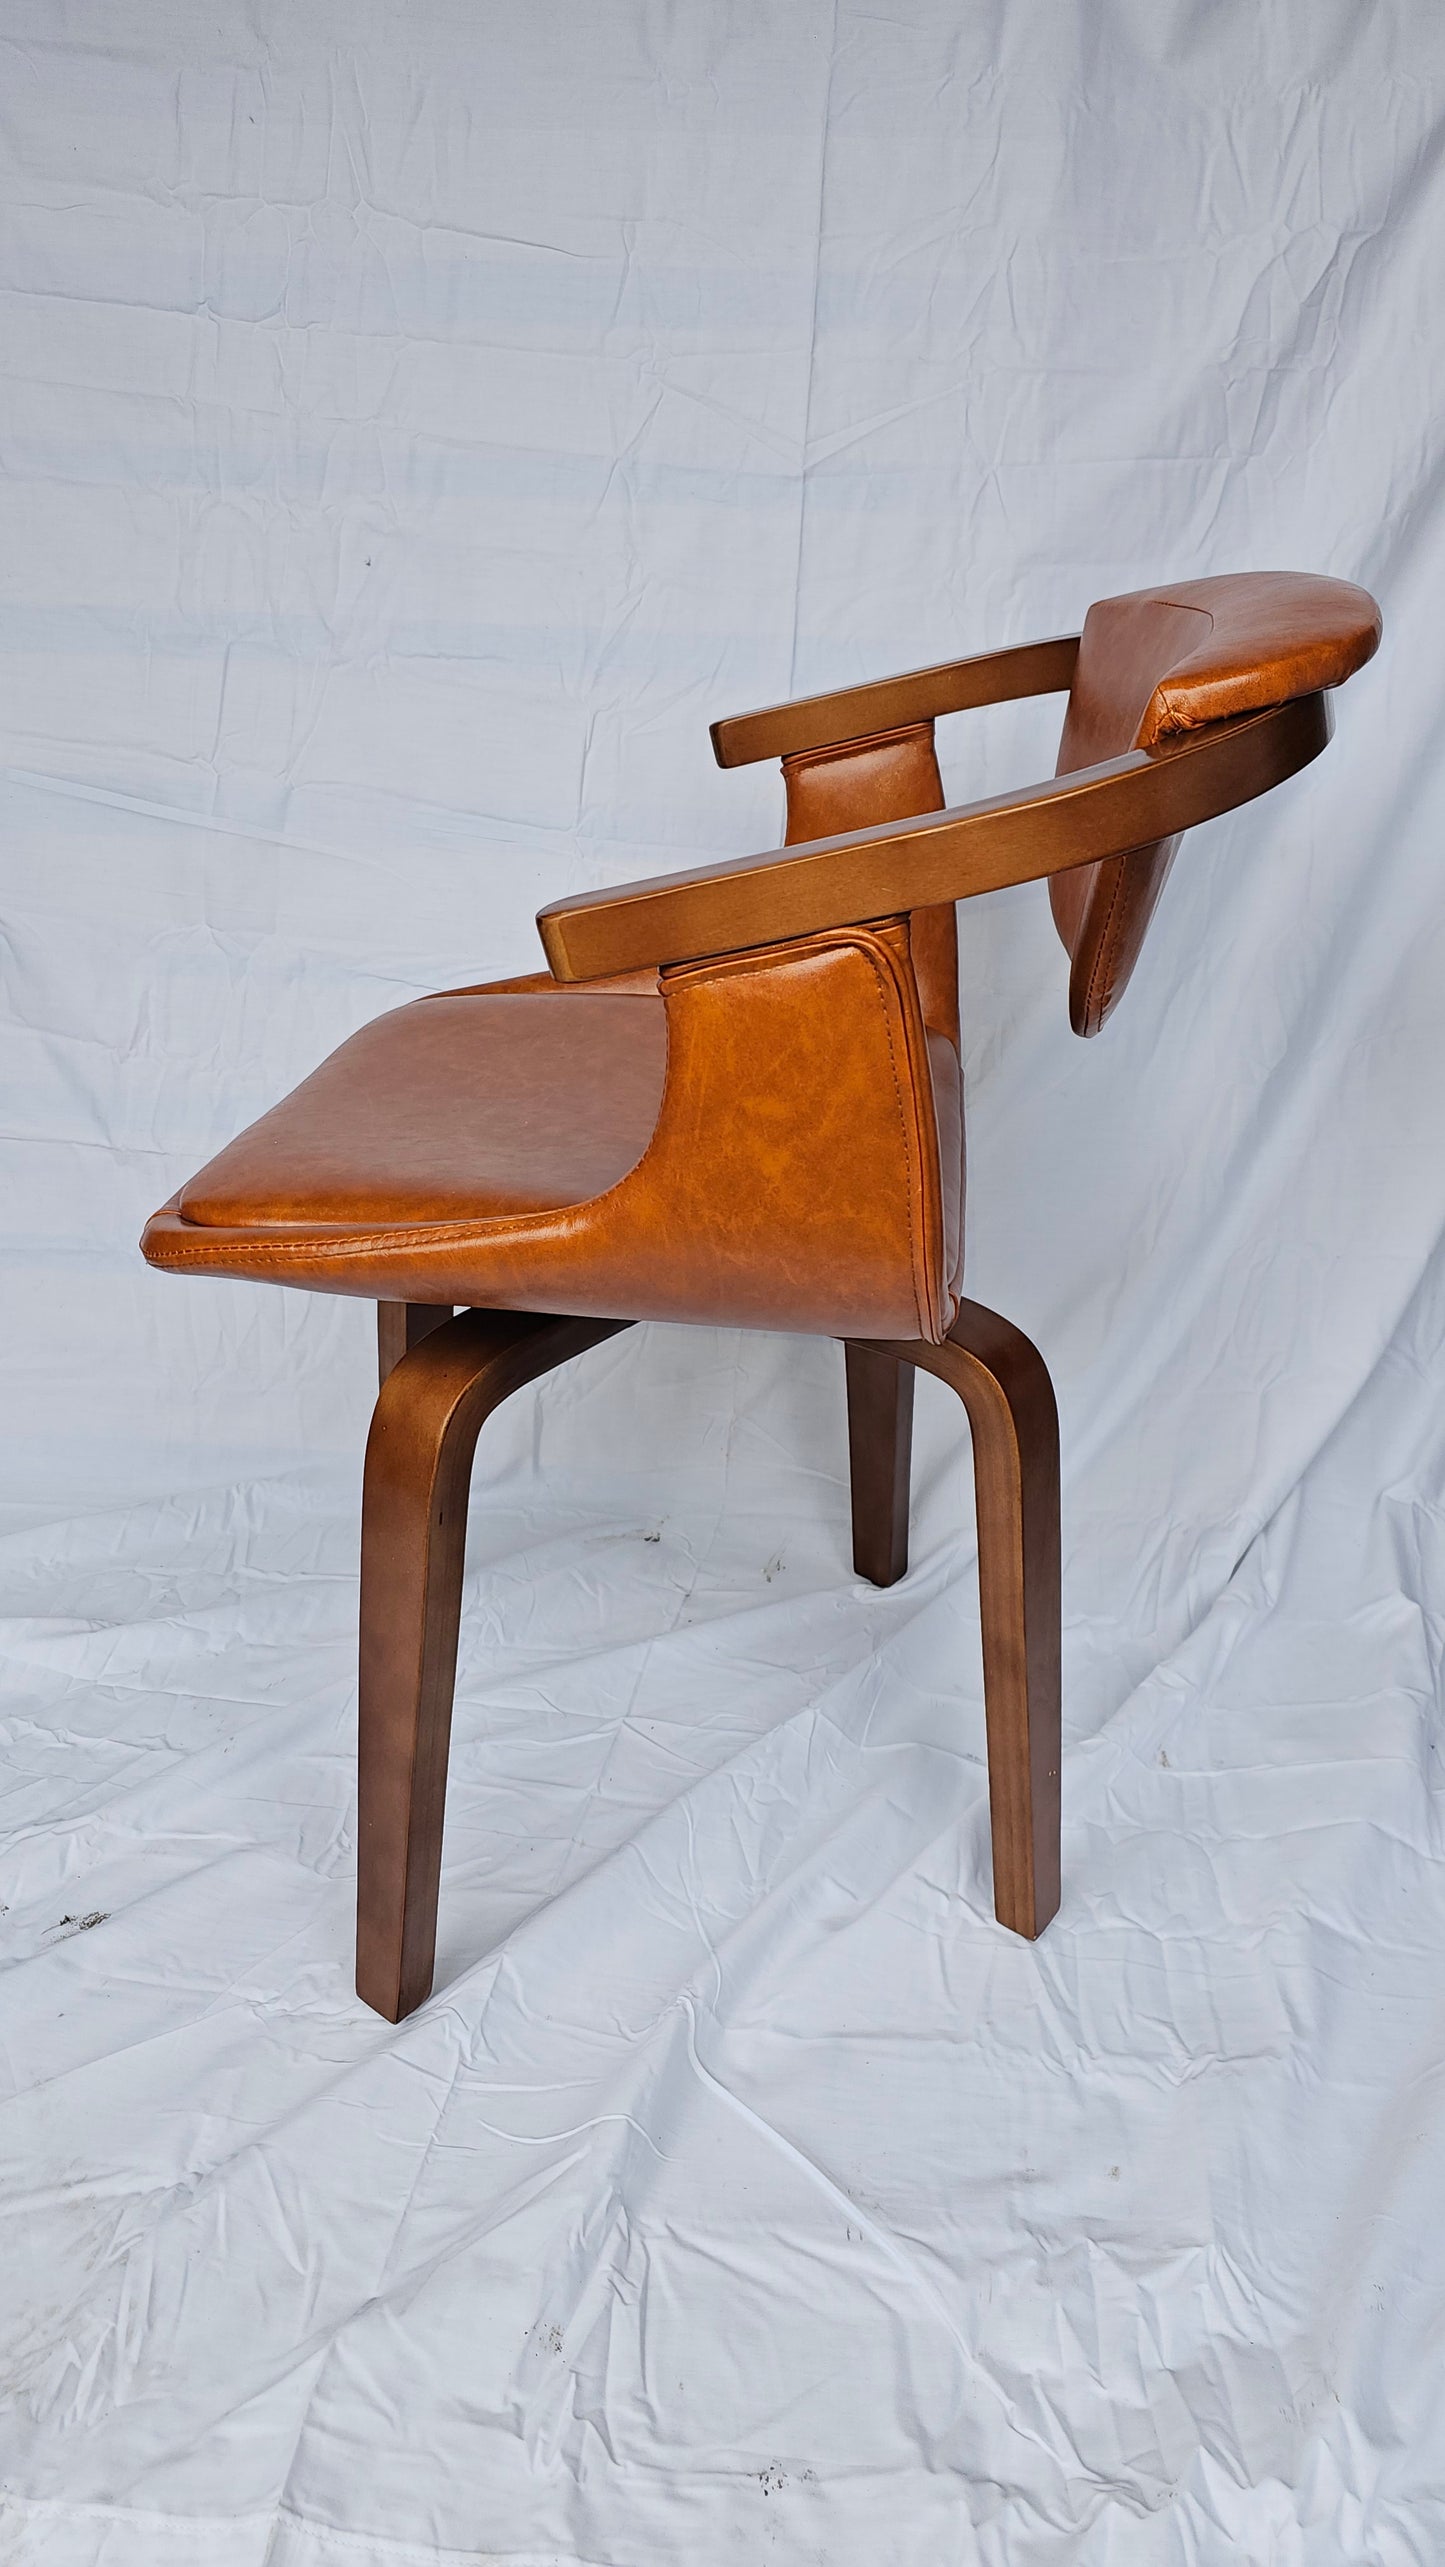 Art Leon Swivel Dining Chair